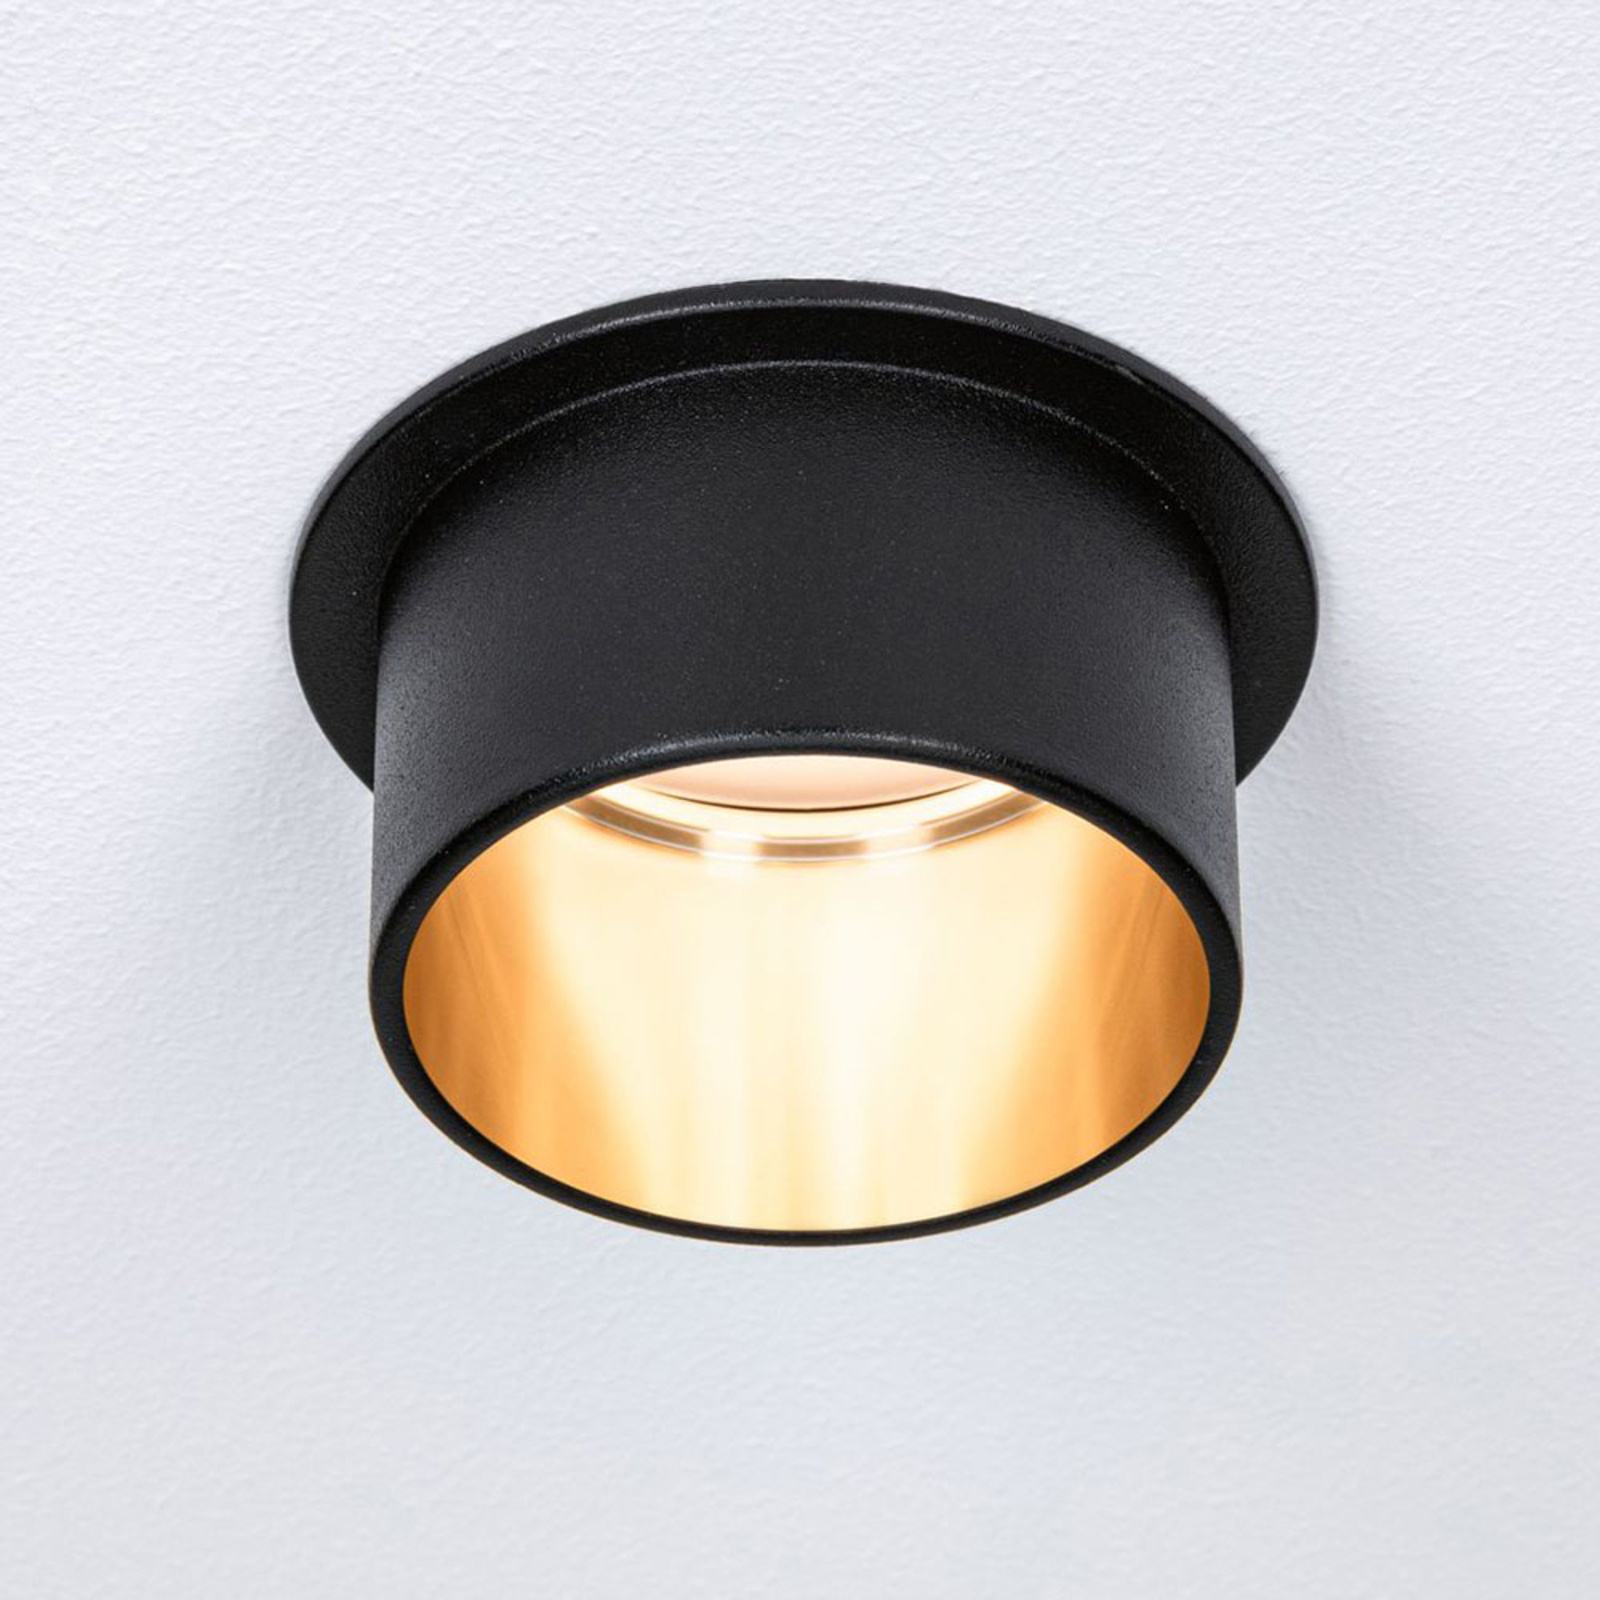 Paulmann Gil LED de encastrar preto mate/dourado, conjunto de 3